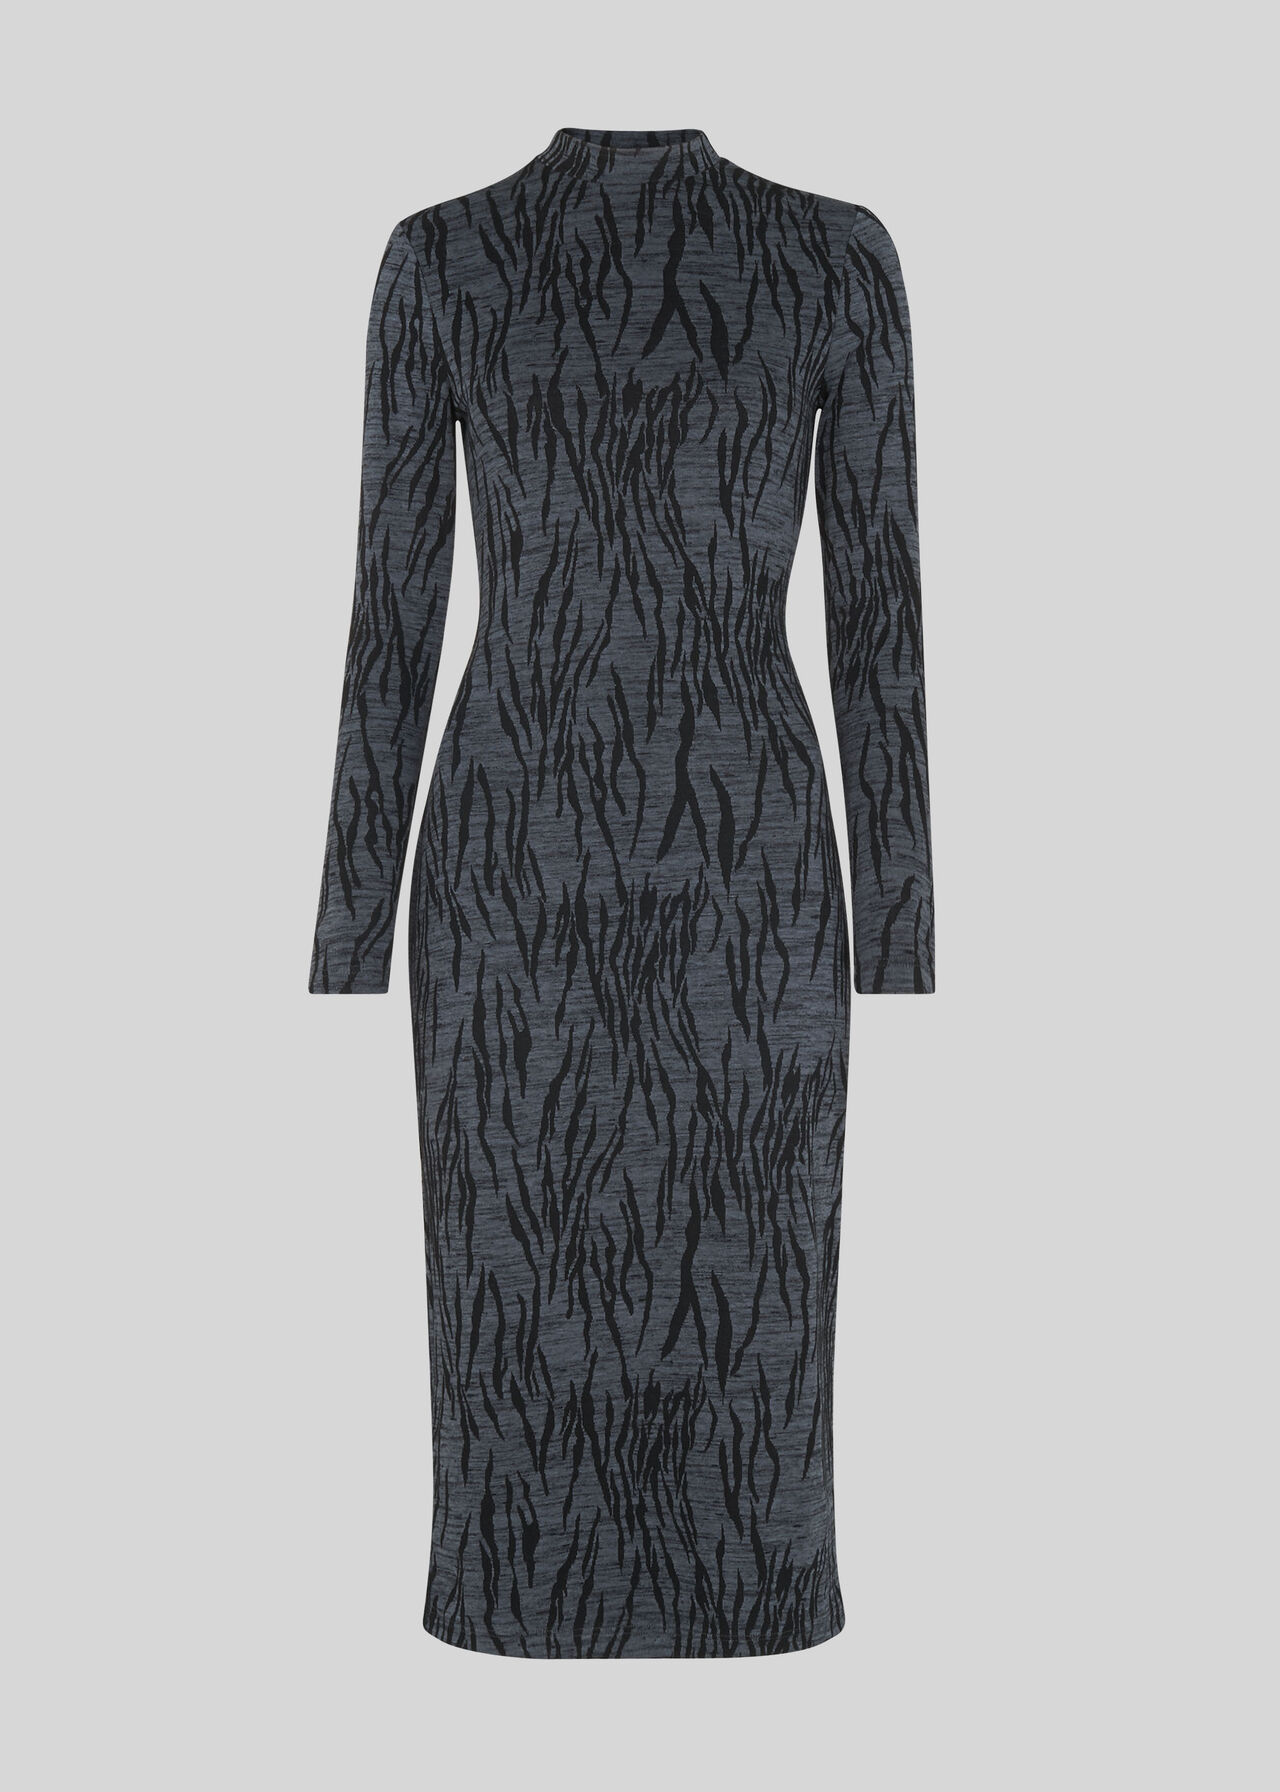 Grey/Multi Zebra Jersey Dress | WHISTLES